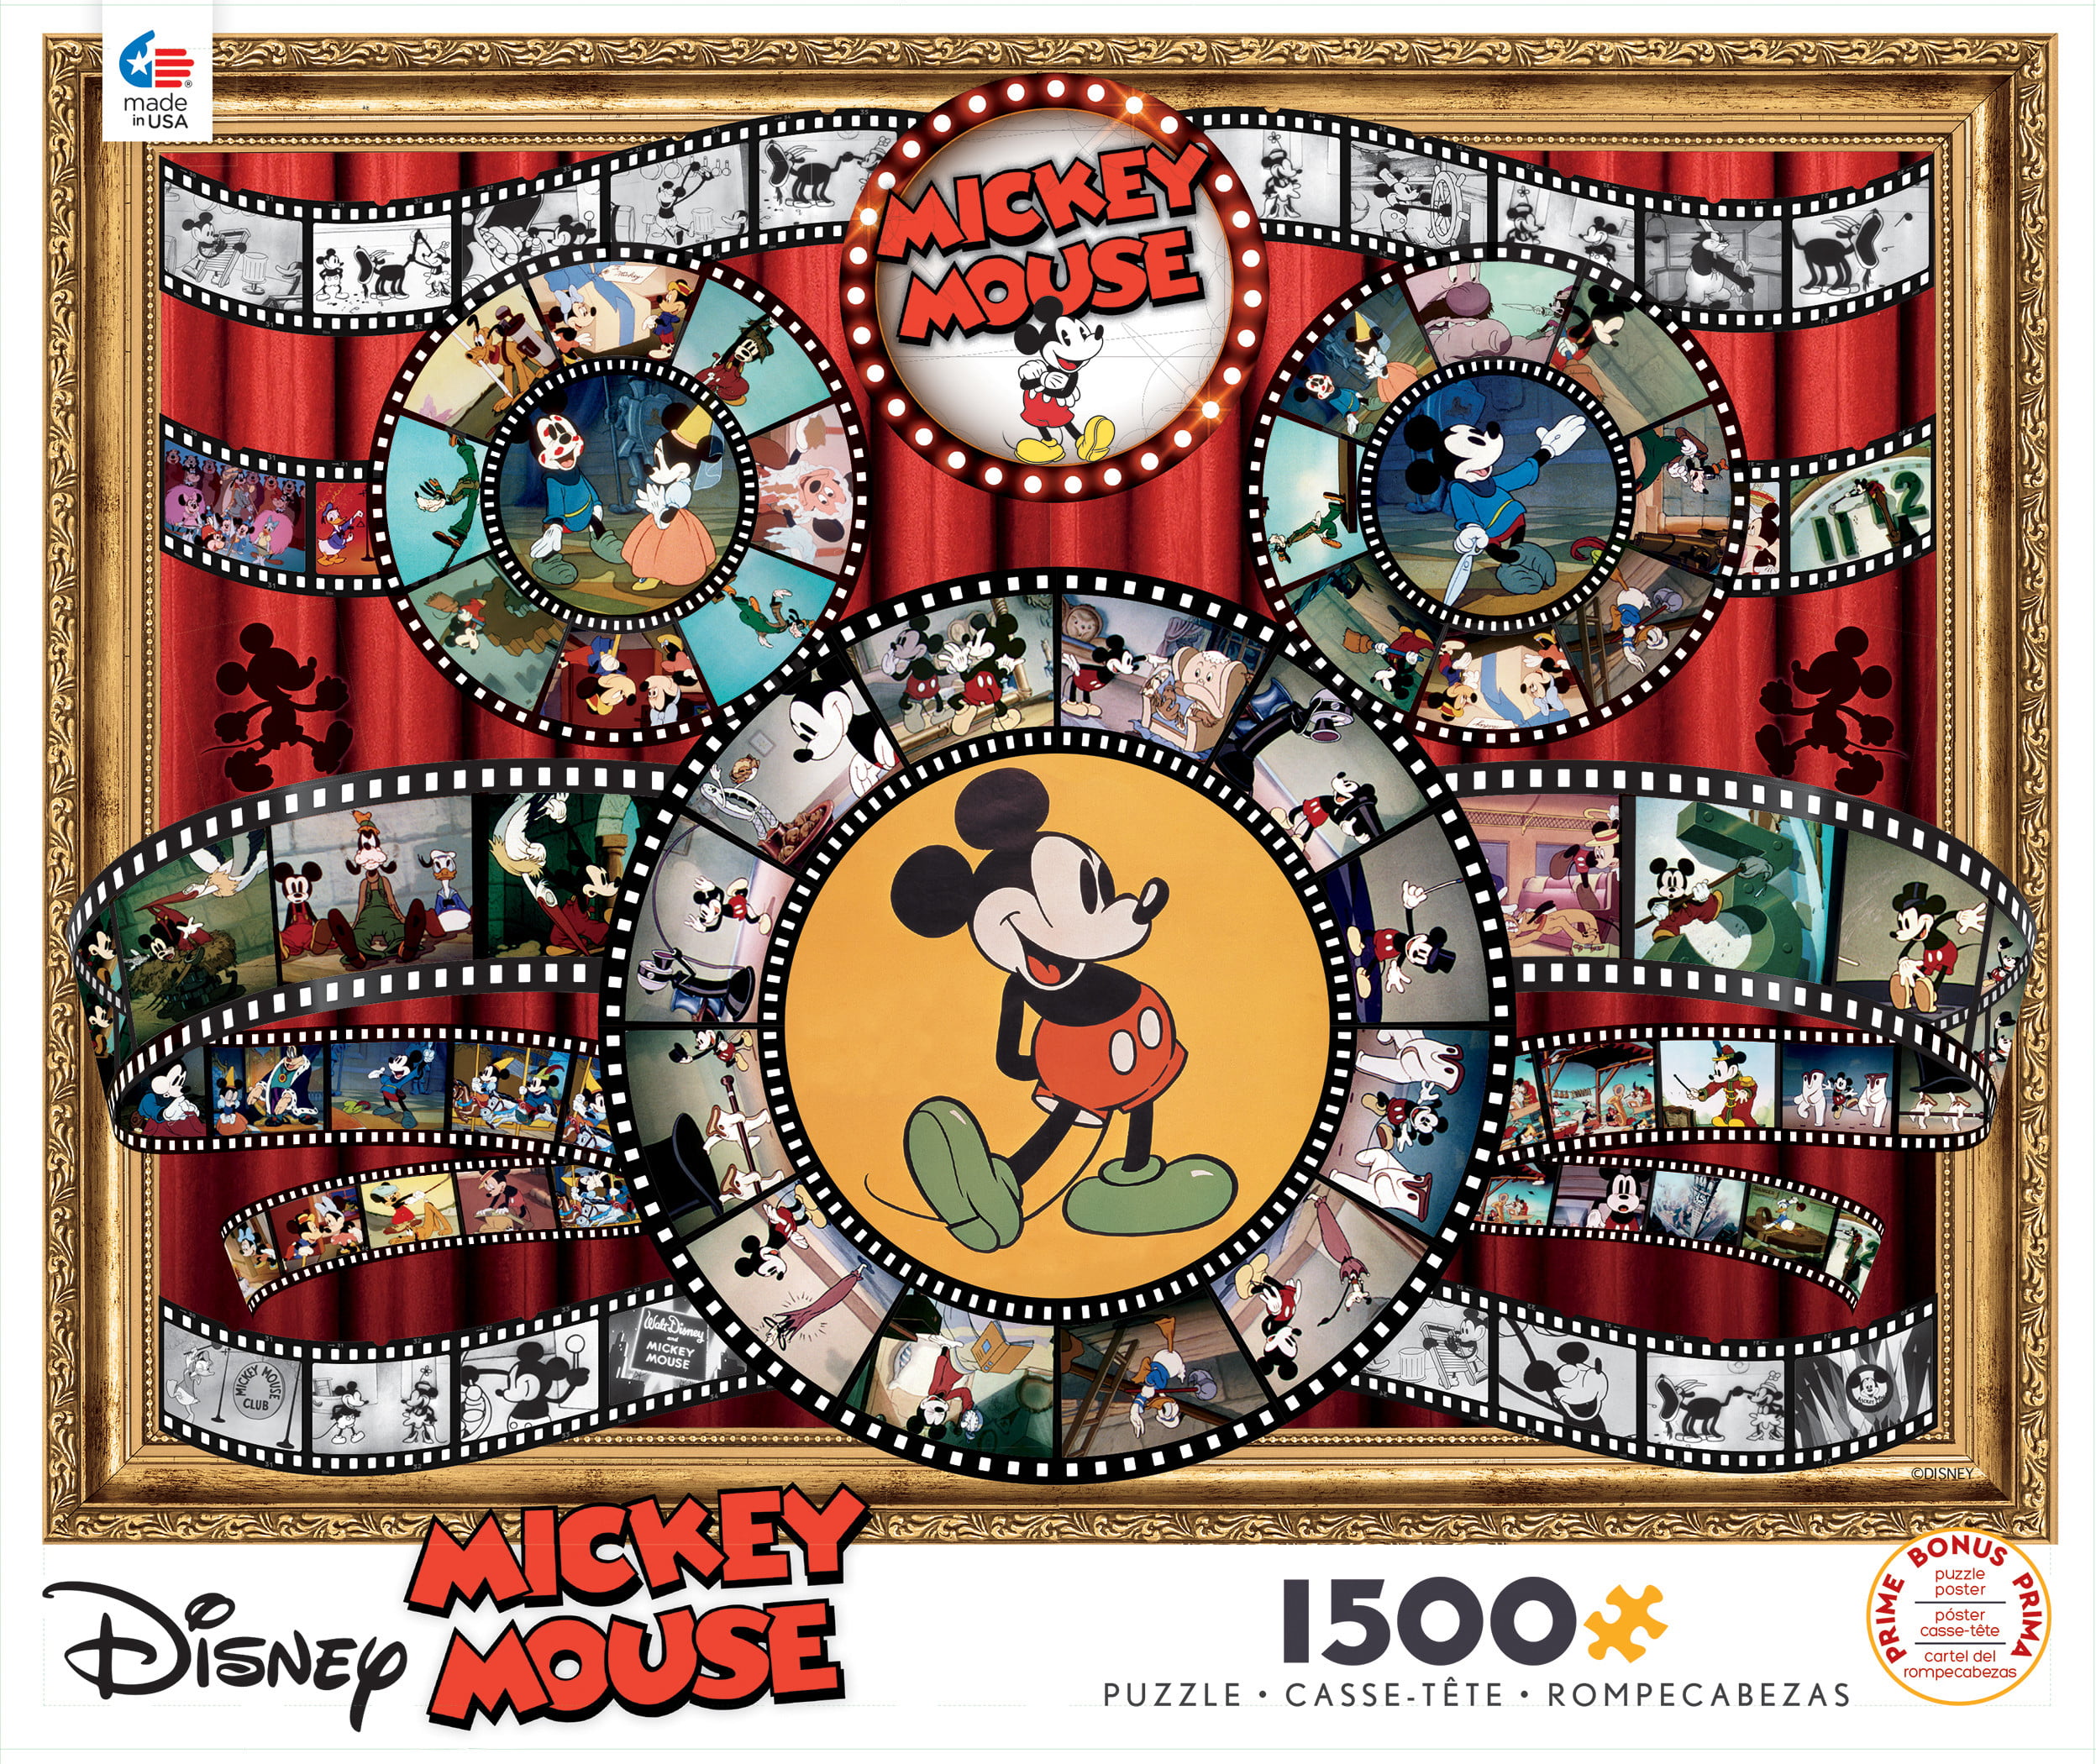 NEW RAVENSBURGER Puzzle 1000 Tiles Pieces Jigsaw Disney Pixar Movie Reel 